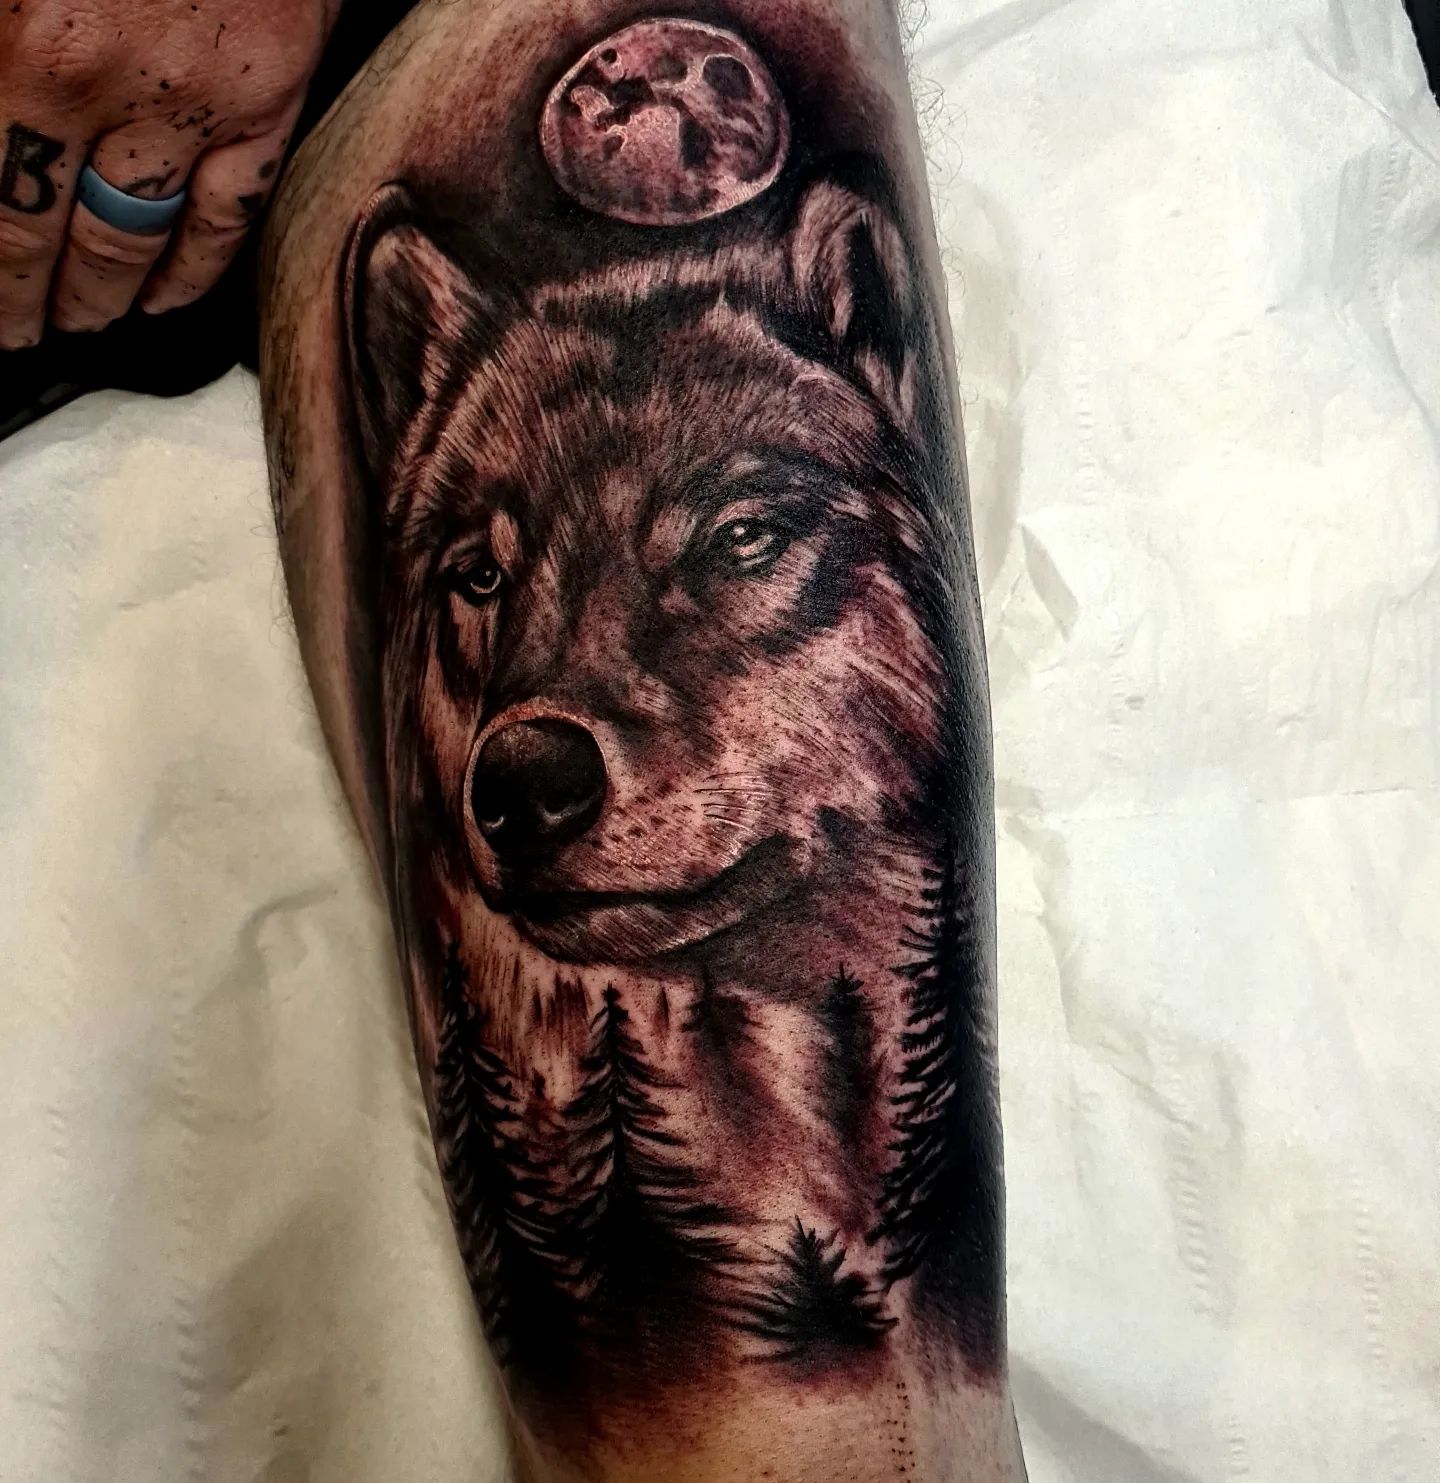 Smoking wolf by Izzi Tattoo from Paradise tattoo studio in Guatemala : r/ tattoos